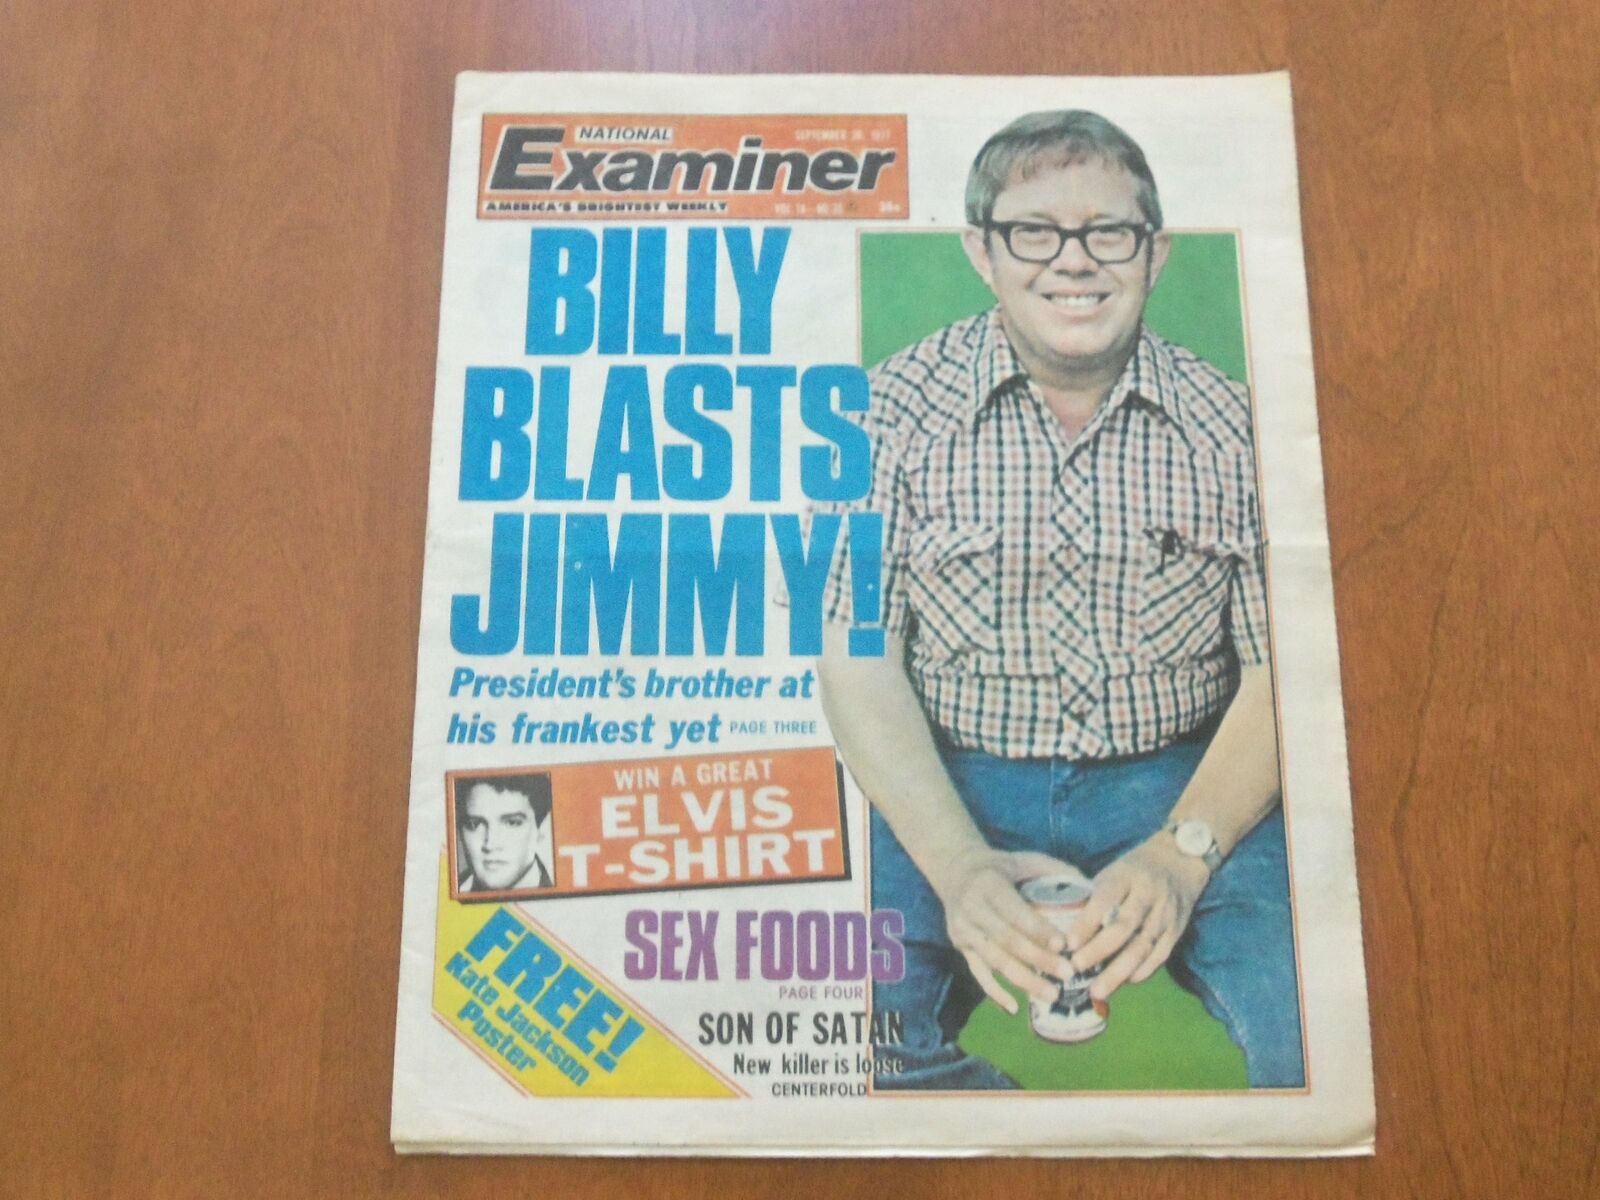 1977 SEPTEMBER 20 NATIONAL EXAMINER NEWSPAPER-BILLY BLASTS JIMMY CARTER- NP 4712